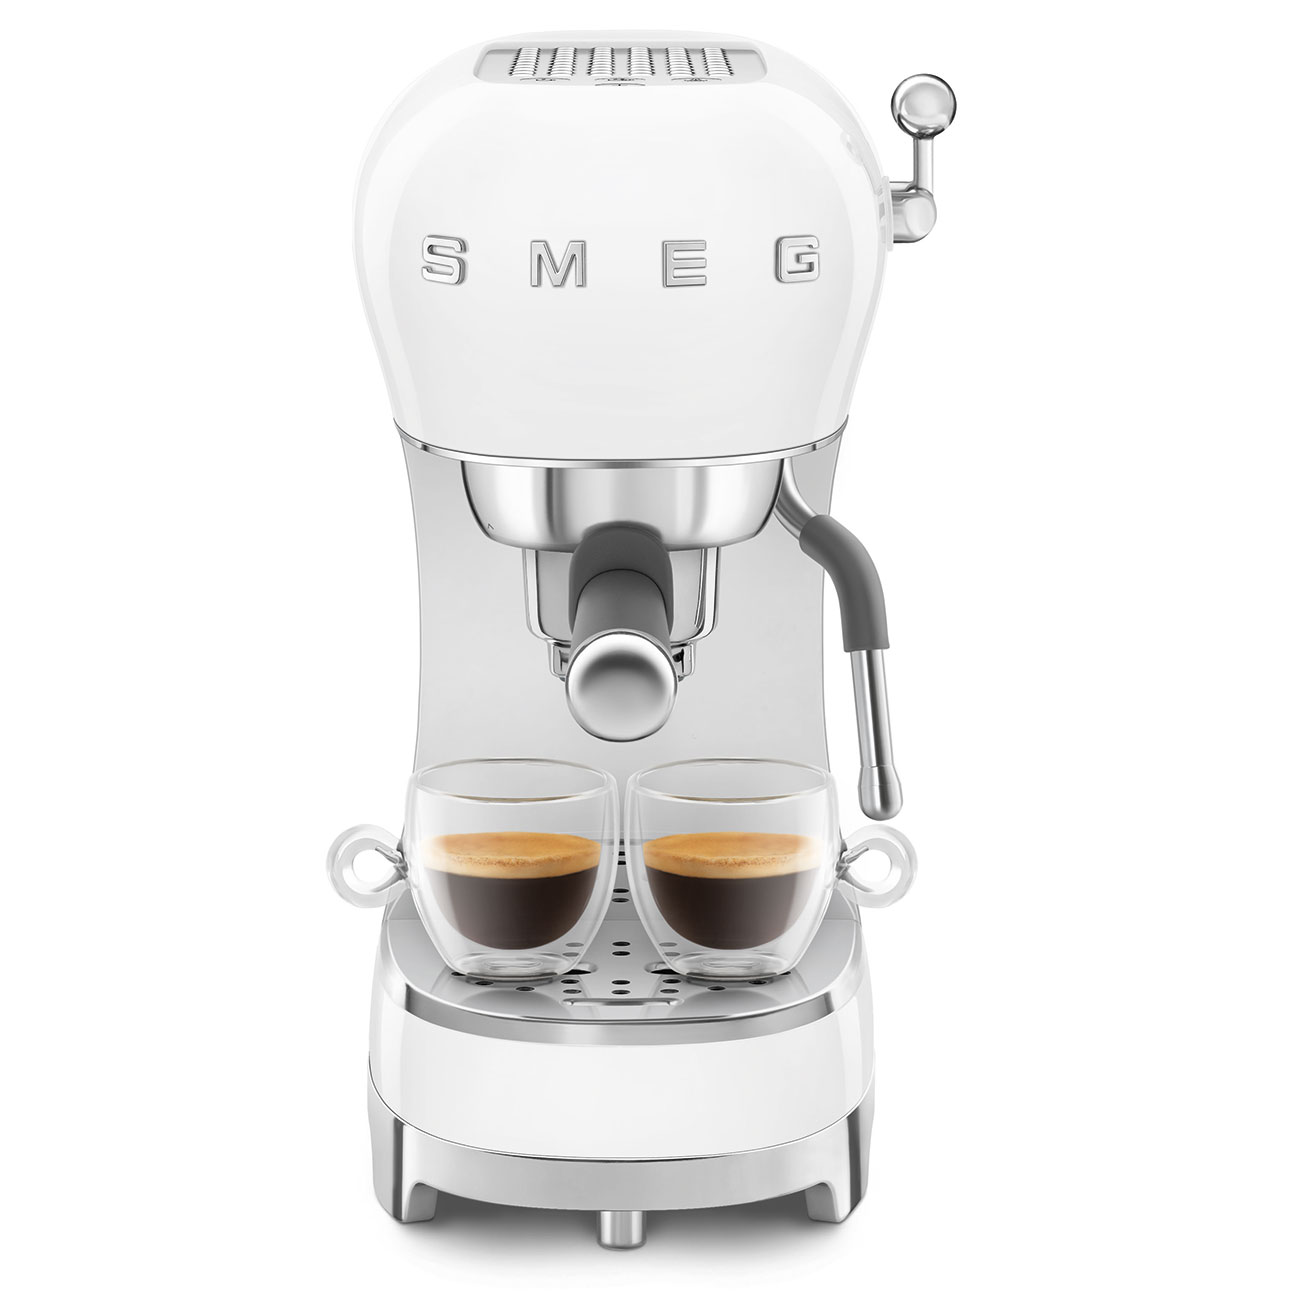 Smeg White Espresso Manual Coffee Machine with Steam Wand_5